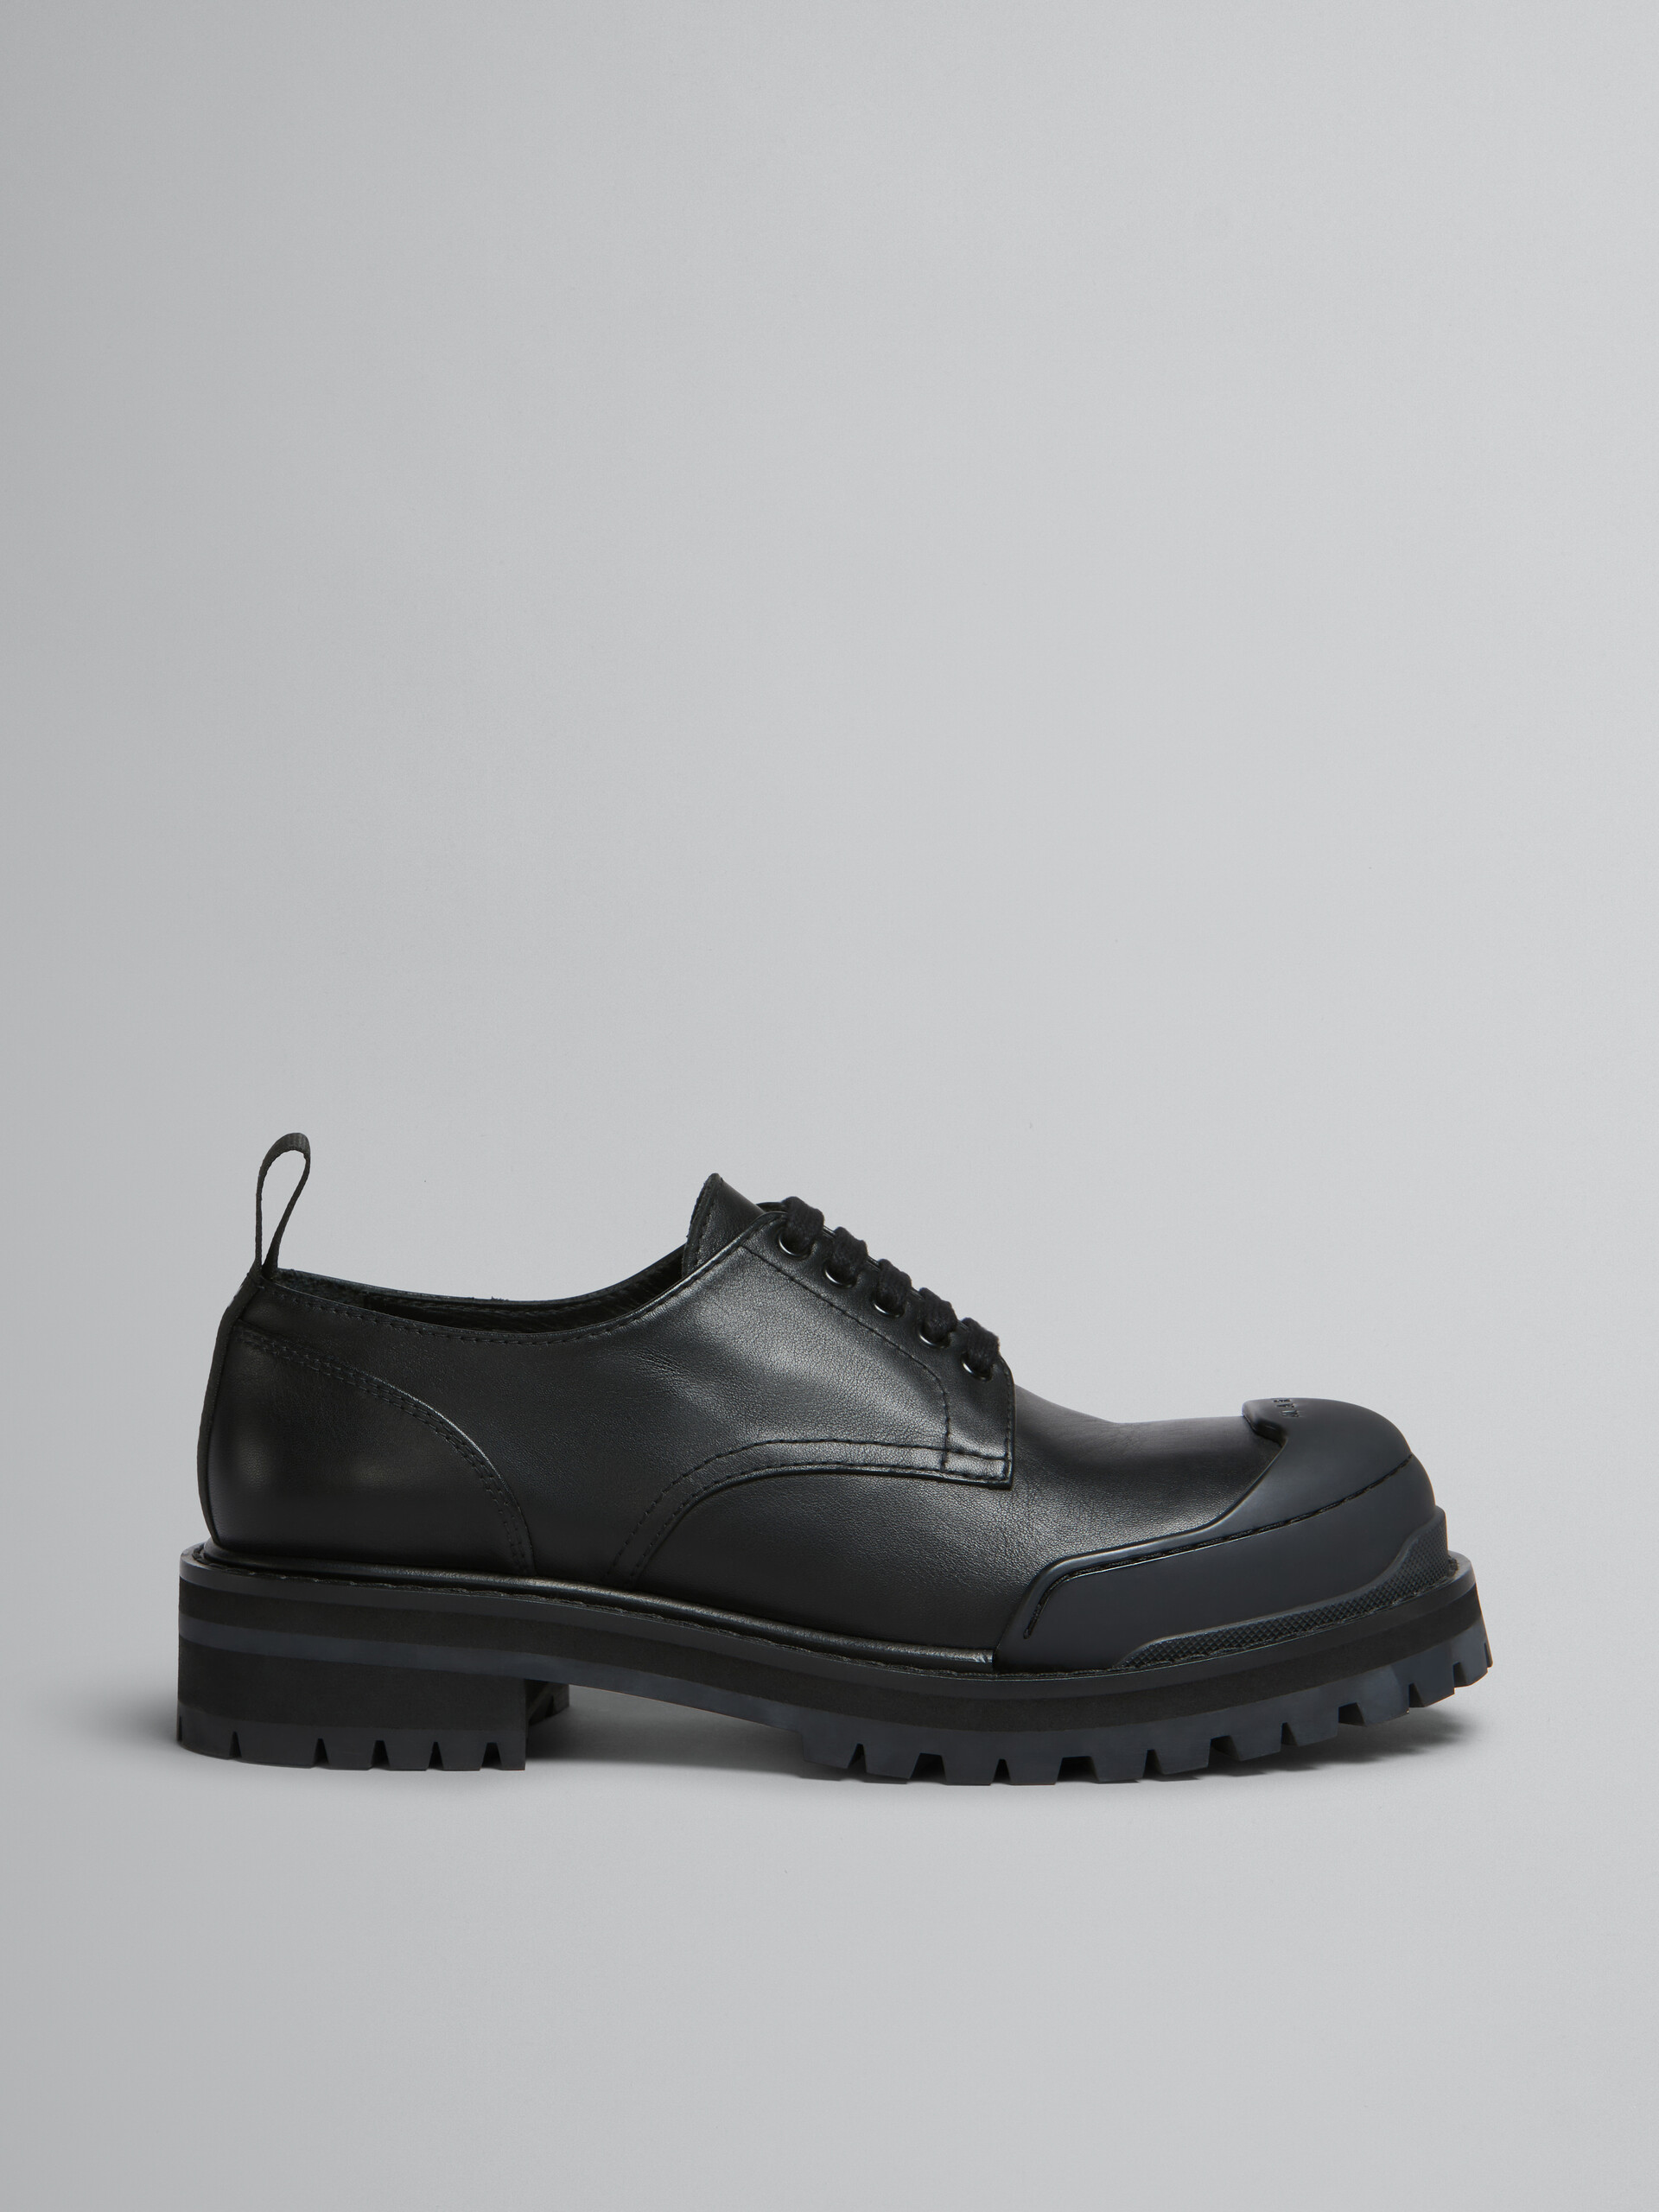 Chaussures derby Dada Army en cuir noir - Chaussures à Lacets - Image 1